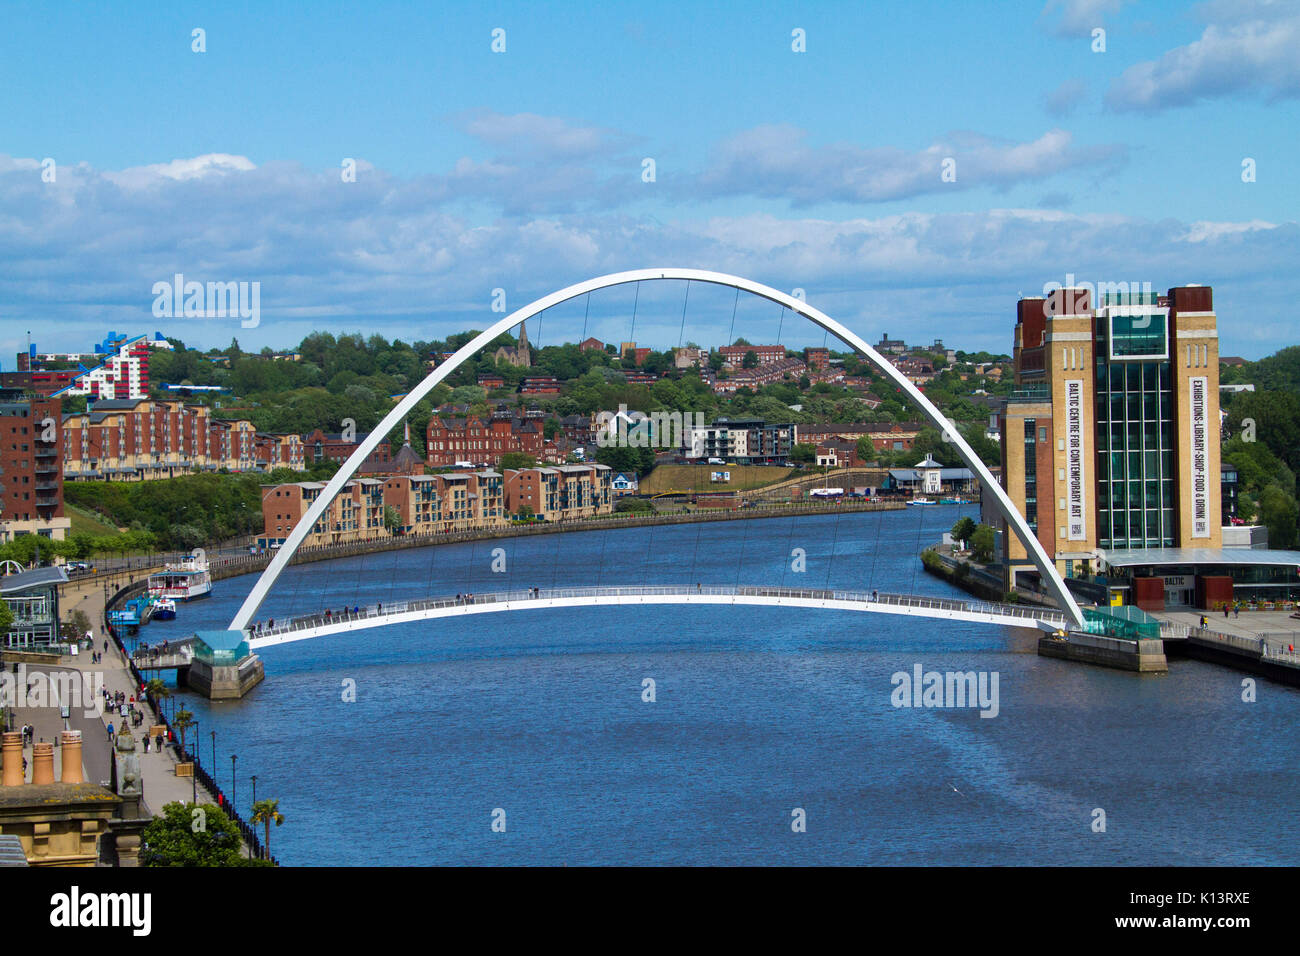 Gateshead millennium bridge, tilting pedestrian bridge across Tyne River at Newcastle-upon-Tyne with buildings of city nearby under blue sky Stock Photo